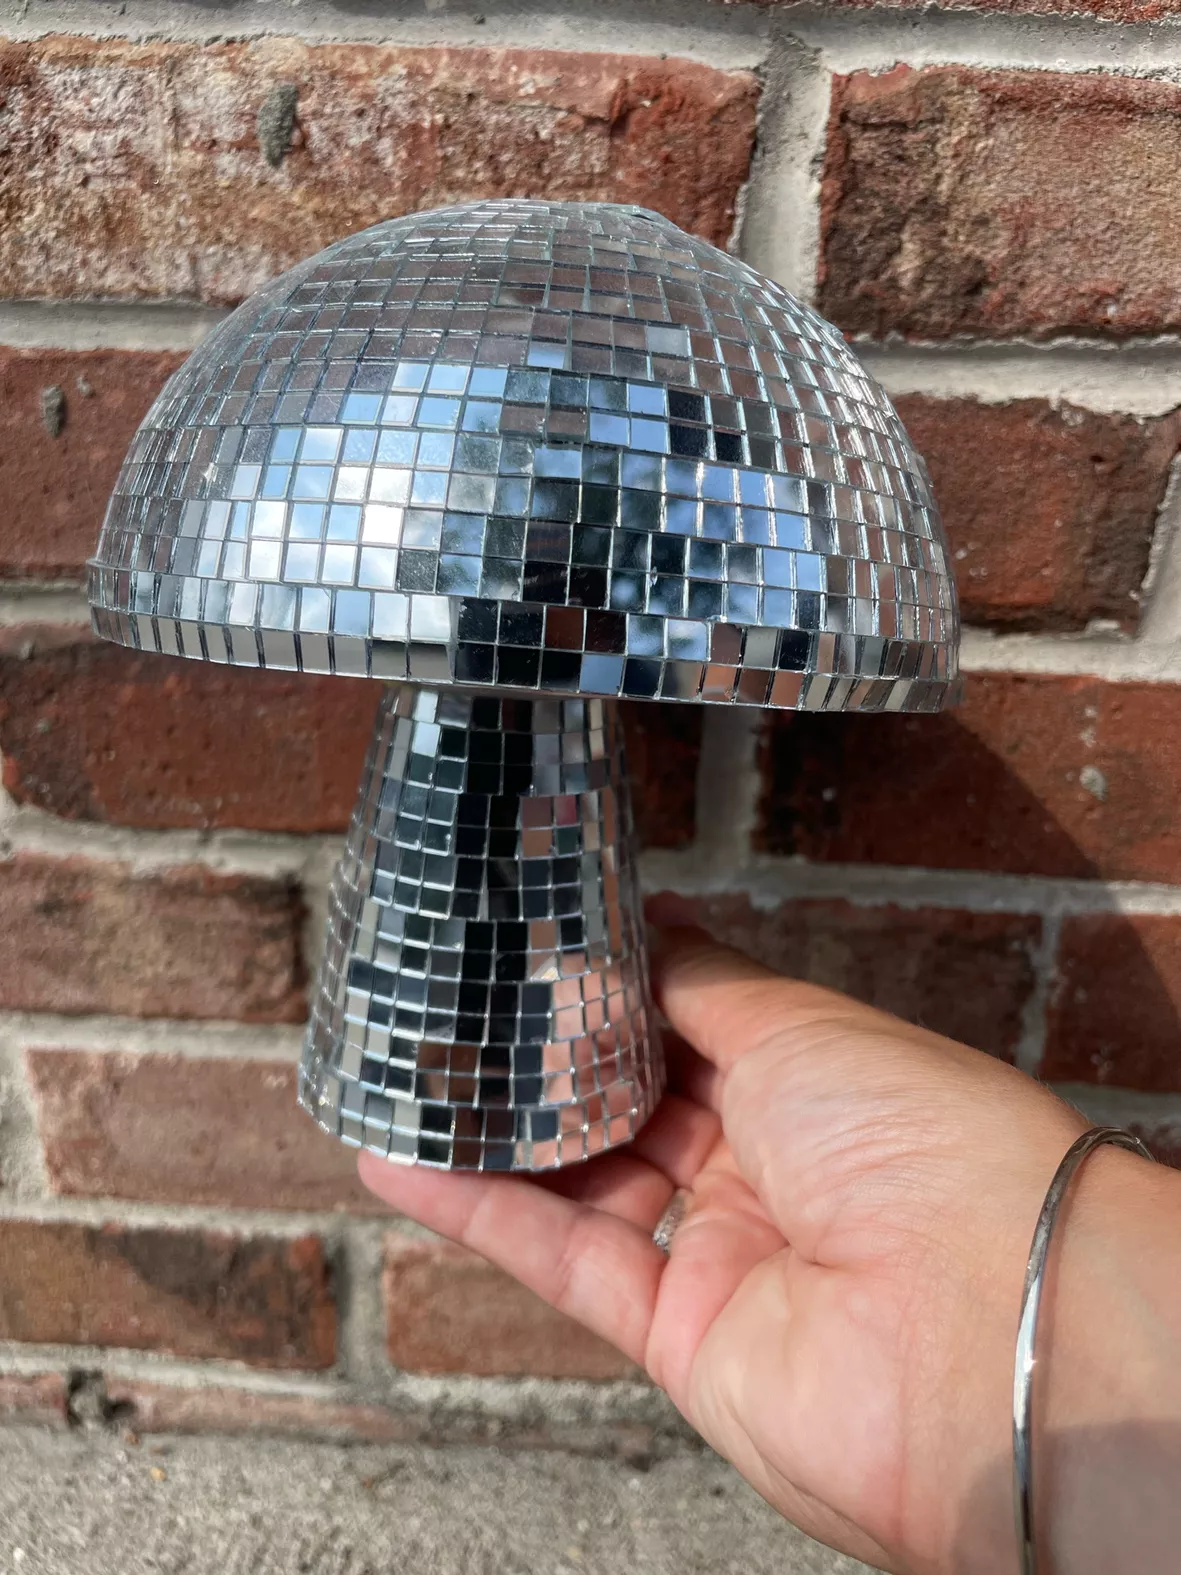 Purple Mushroom Disco Mirror Ball Home Decor for Party Room